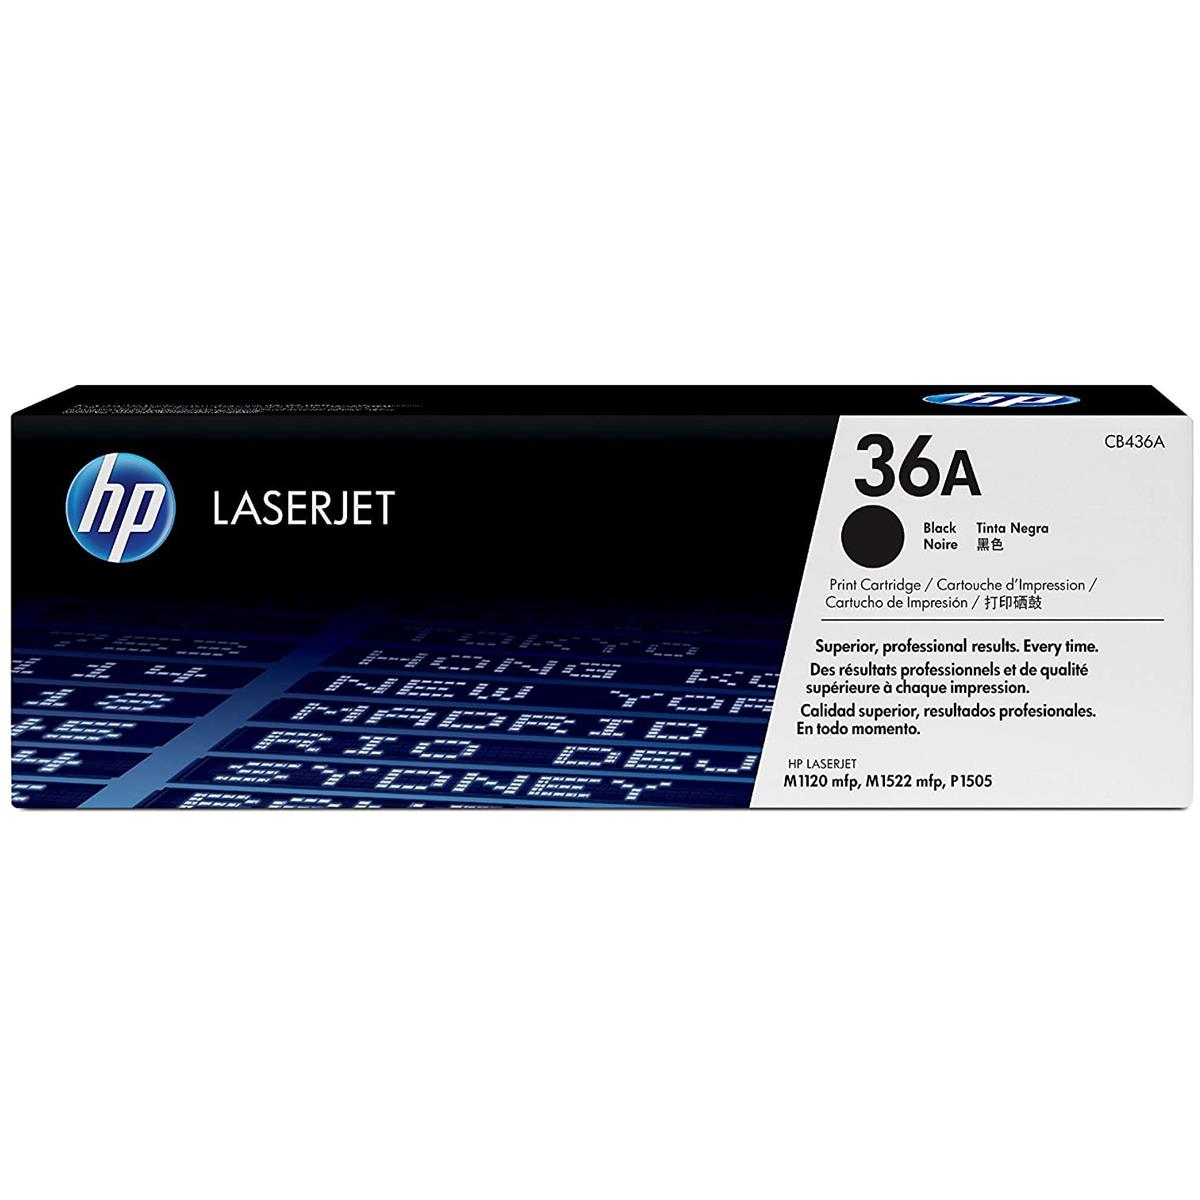 Image of HP LaserJet Black Toner Cartridge